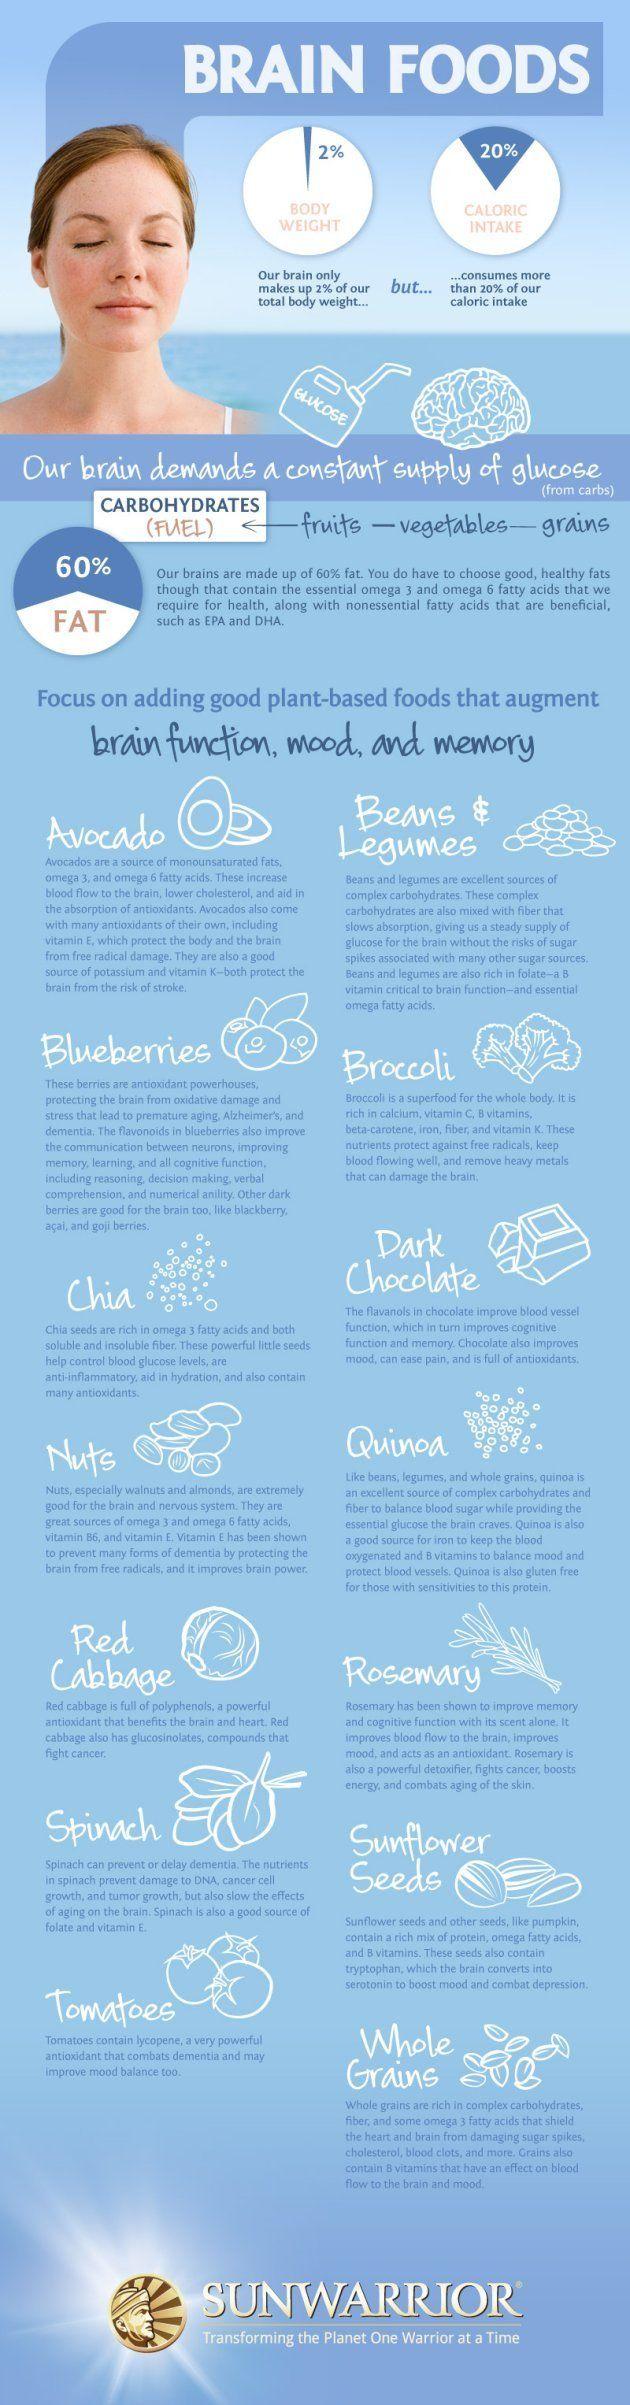 Wedding - Brain Foods Infographic 